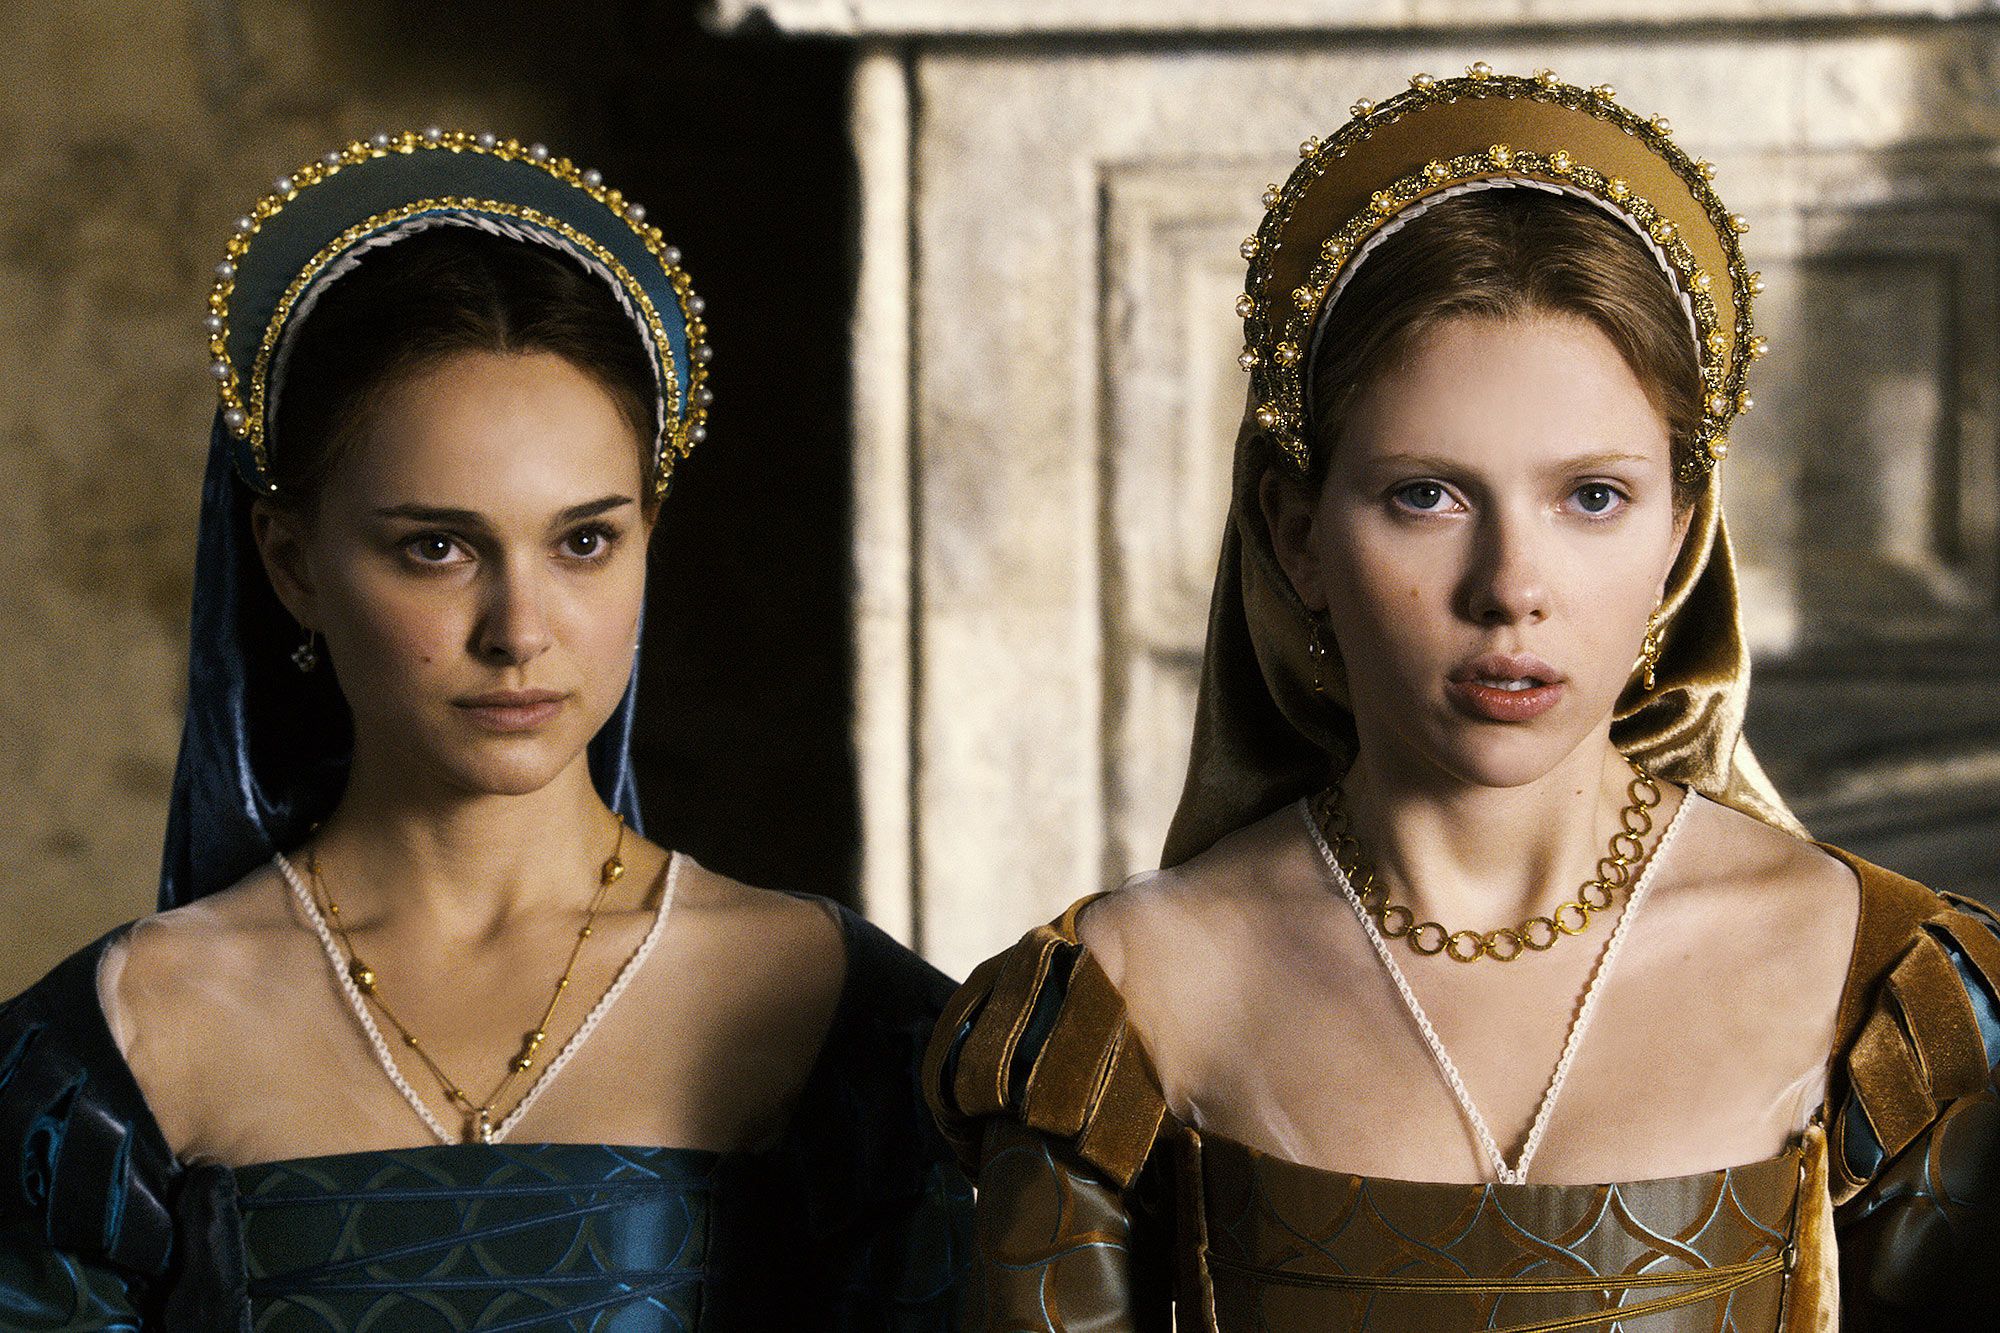 Natalie Portman and Scarlett Johansson are the stars of The Other Boleyn Girl